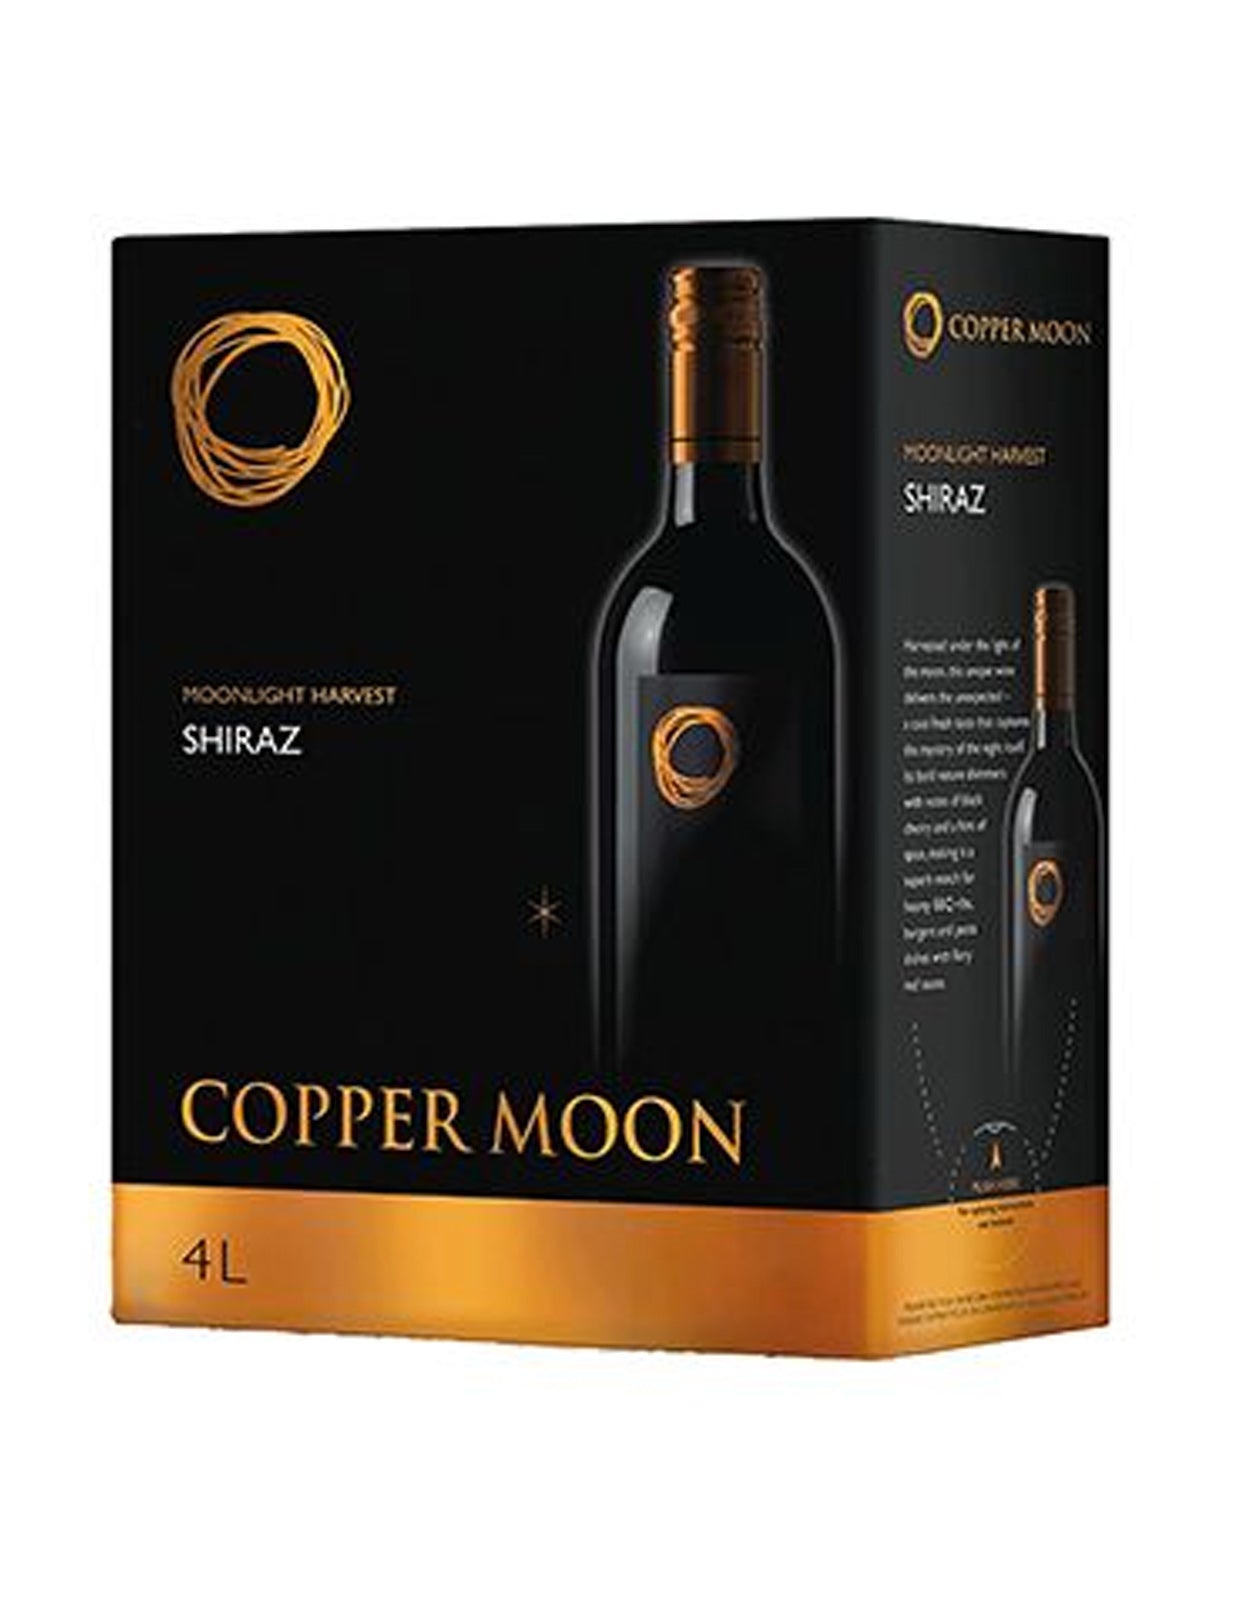 Copper Moon Shiraz (NV) - 4 Litre Box